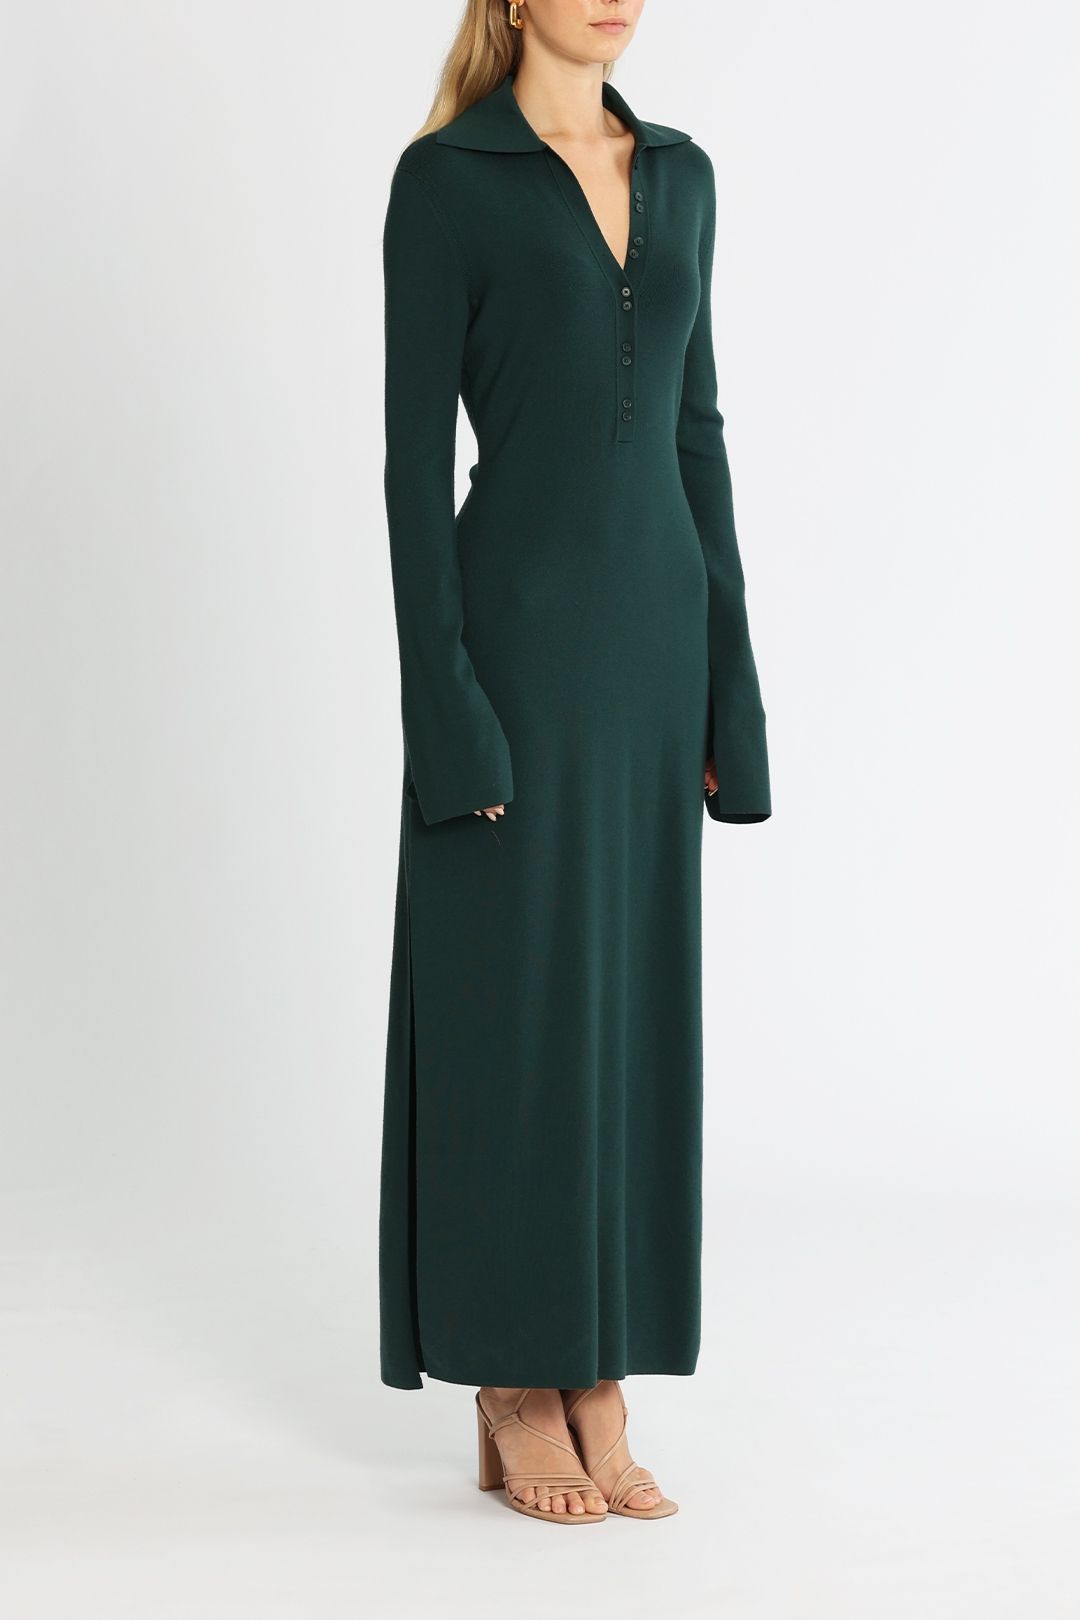 Camilla and Marc Novella Button Up Knit Dress Bottle Green V Neck